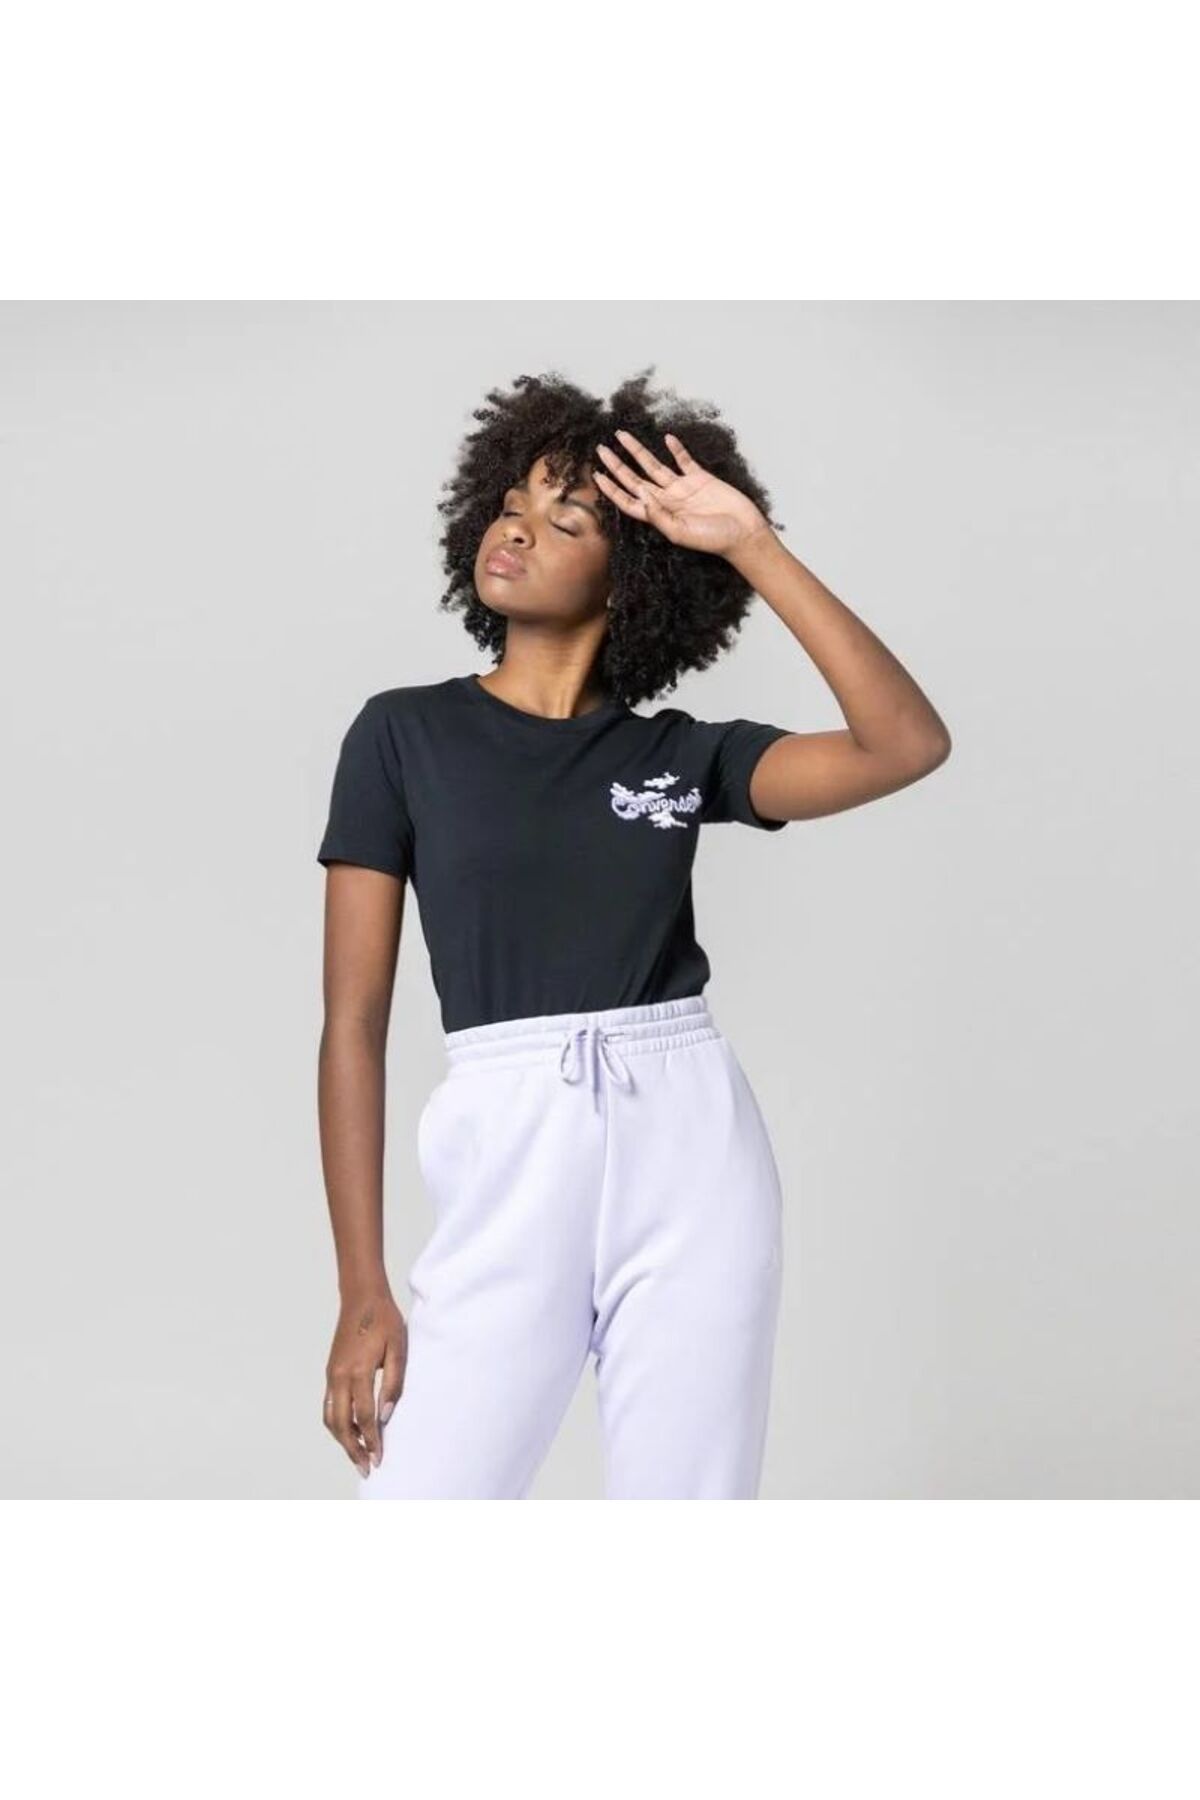 Converse Seasonal Graphic Word Art Kadın Siyah T-Shirt